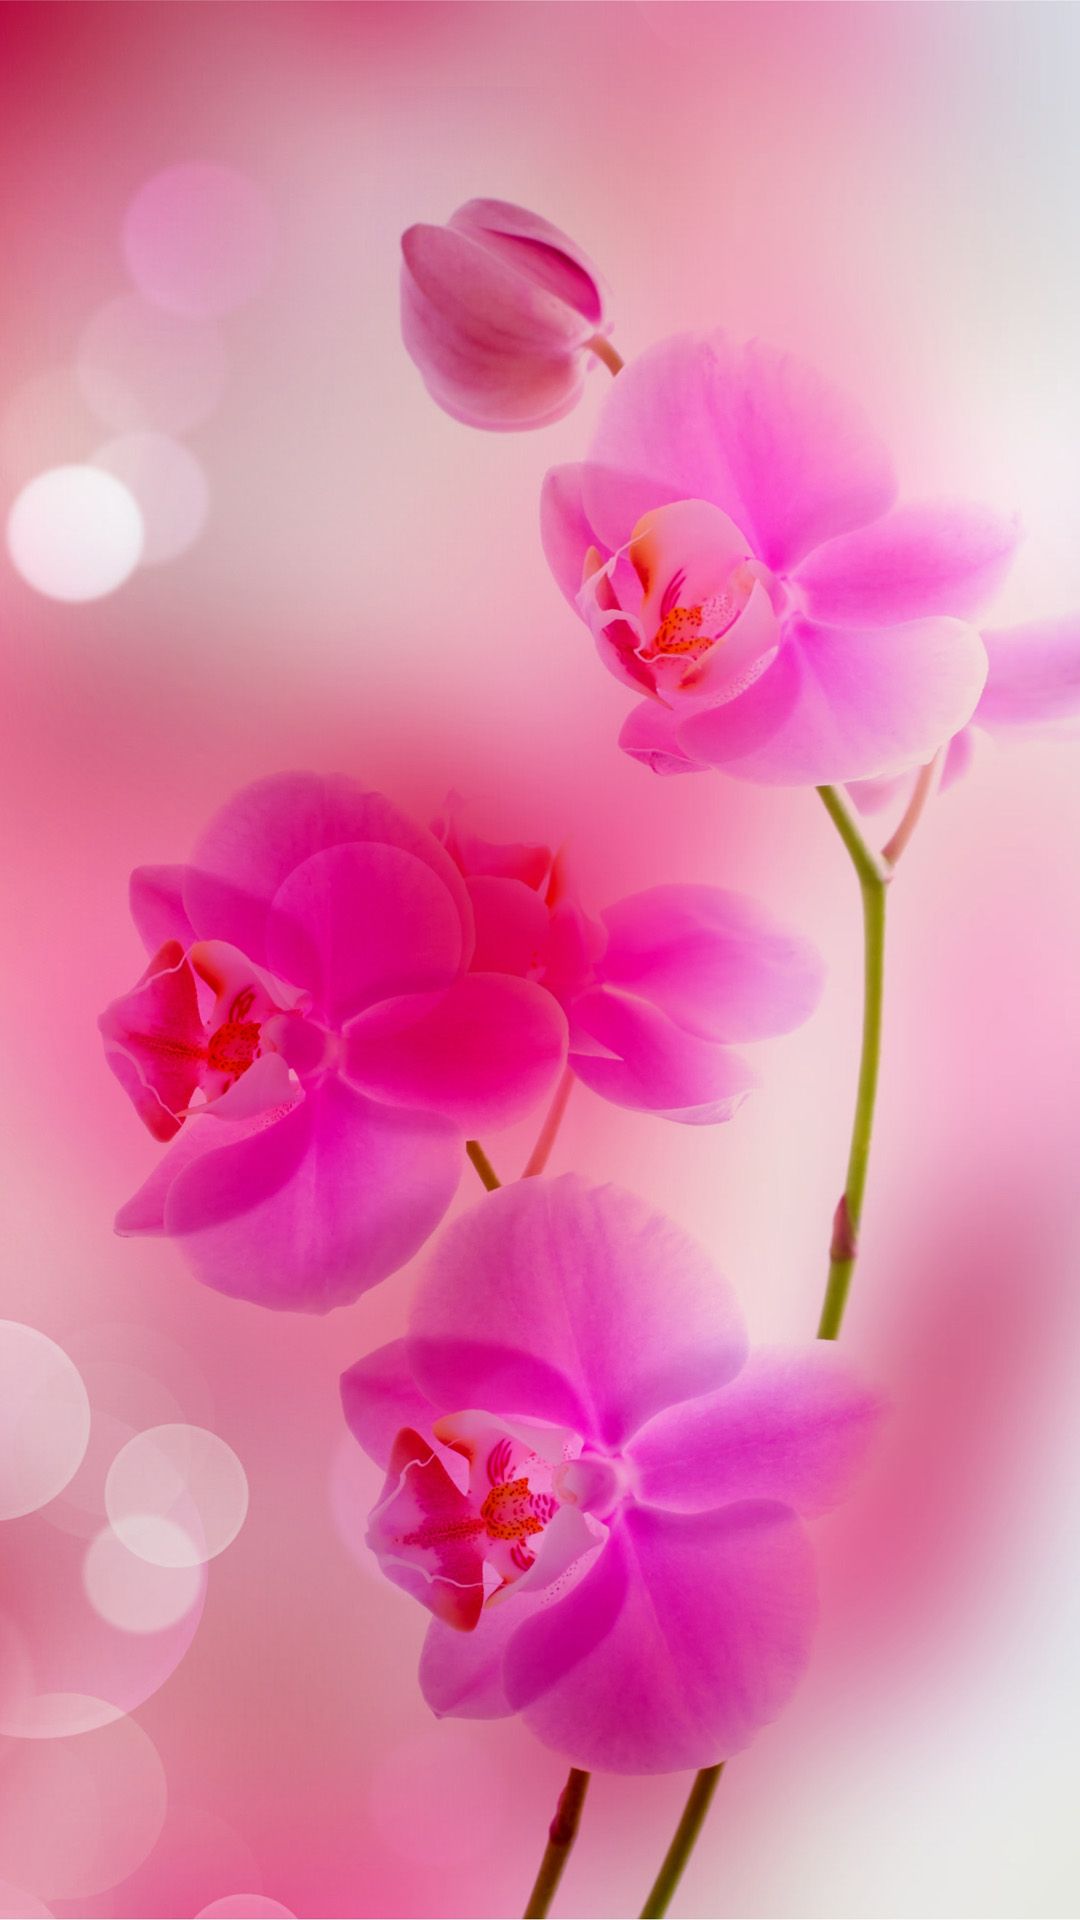 b & q carta da parati rosa,fiore,pianta fiorita,petalo,rosa,orchidea falena